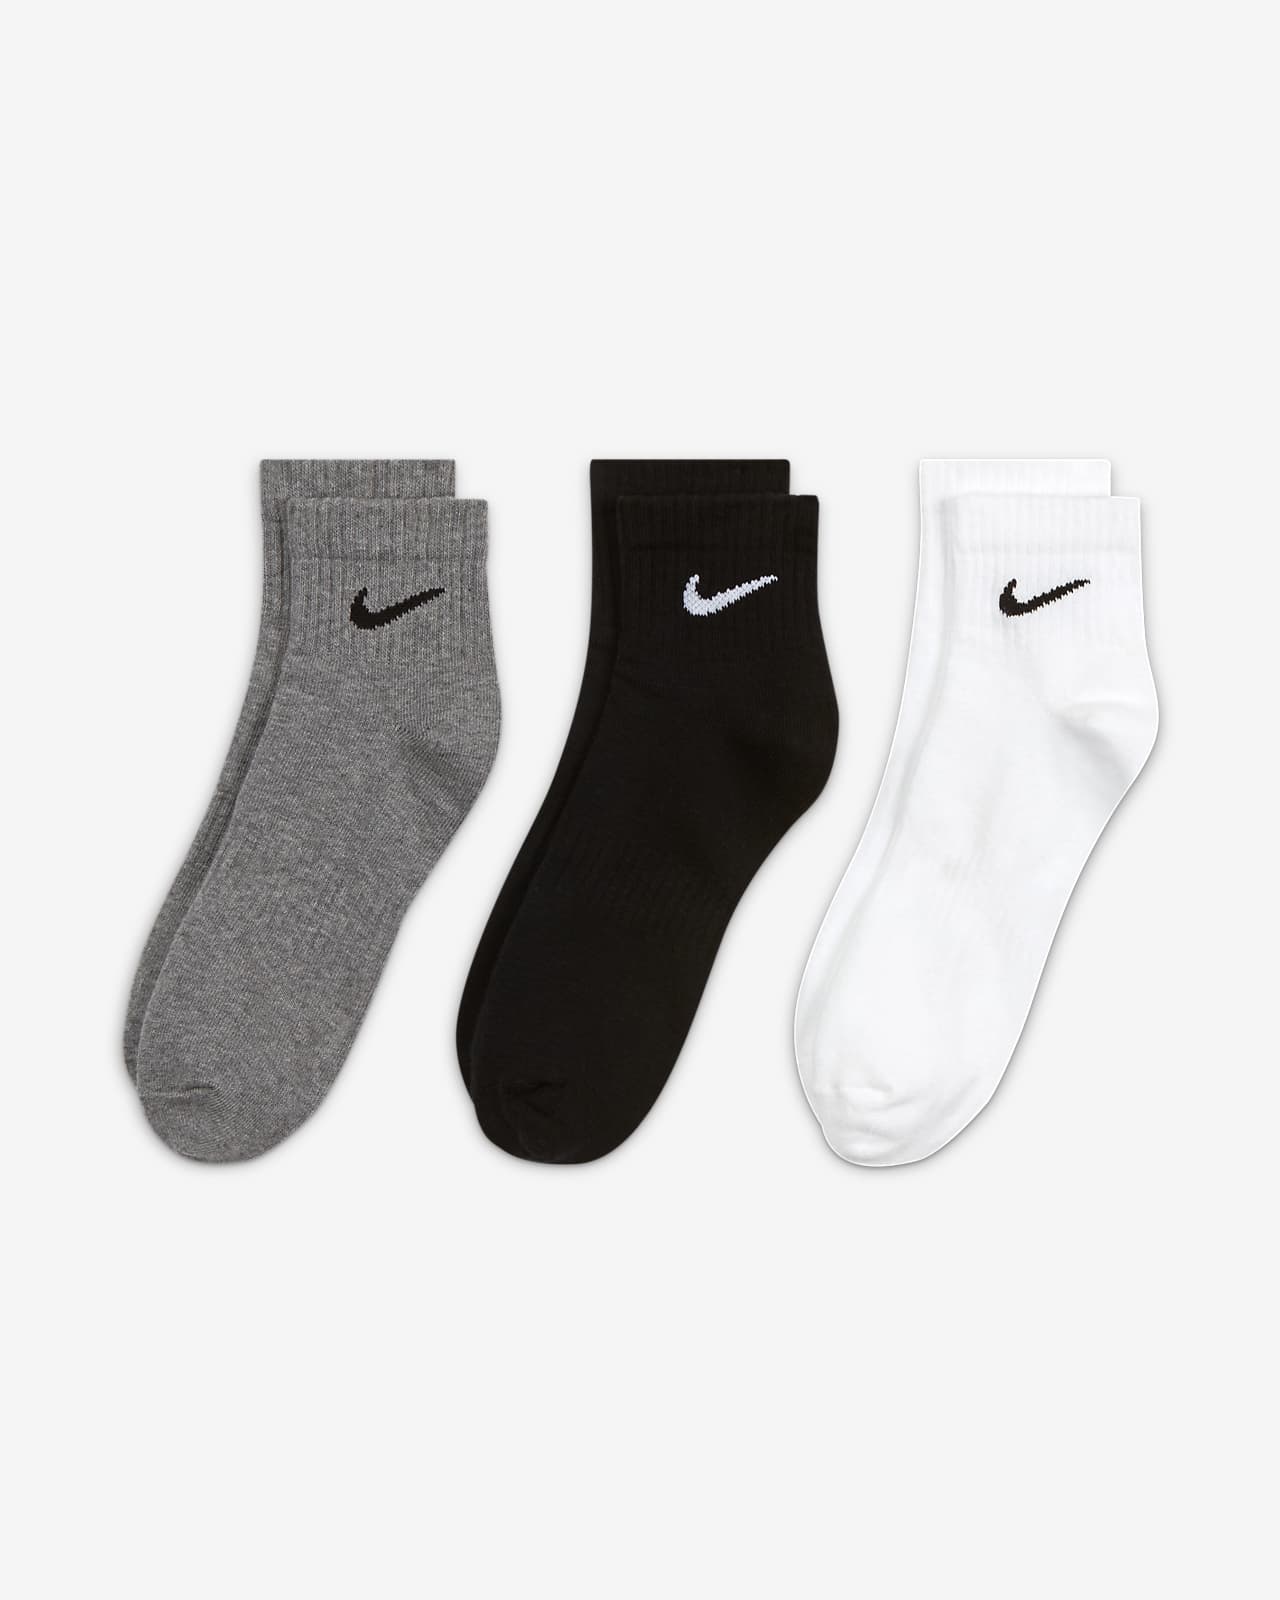 Nike Men's Women's 3 Pairs Socks Lightweight Crew Ankle Cotton Sports Socks